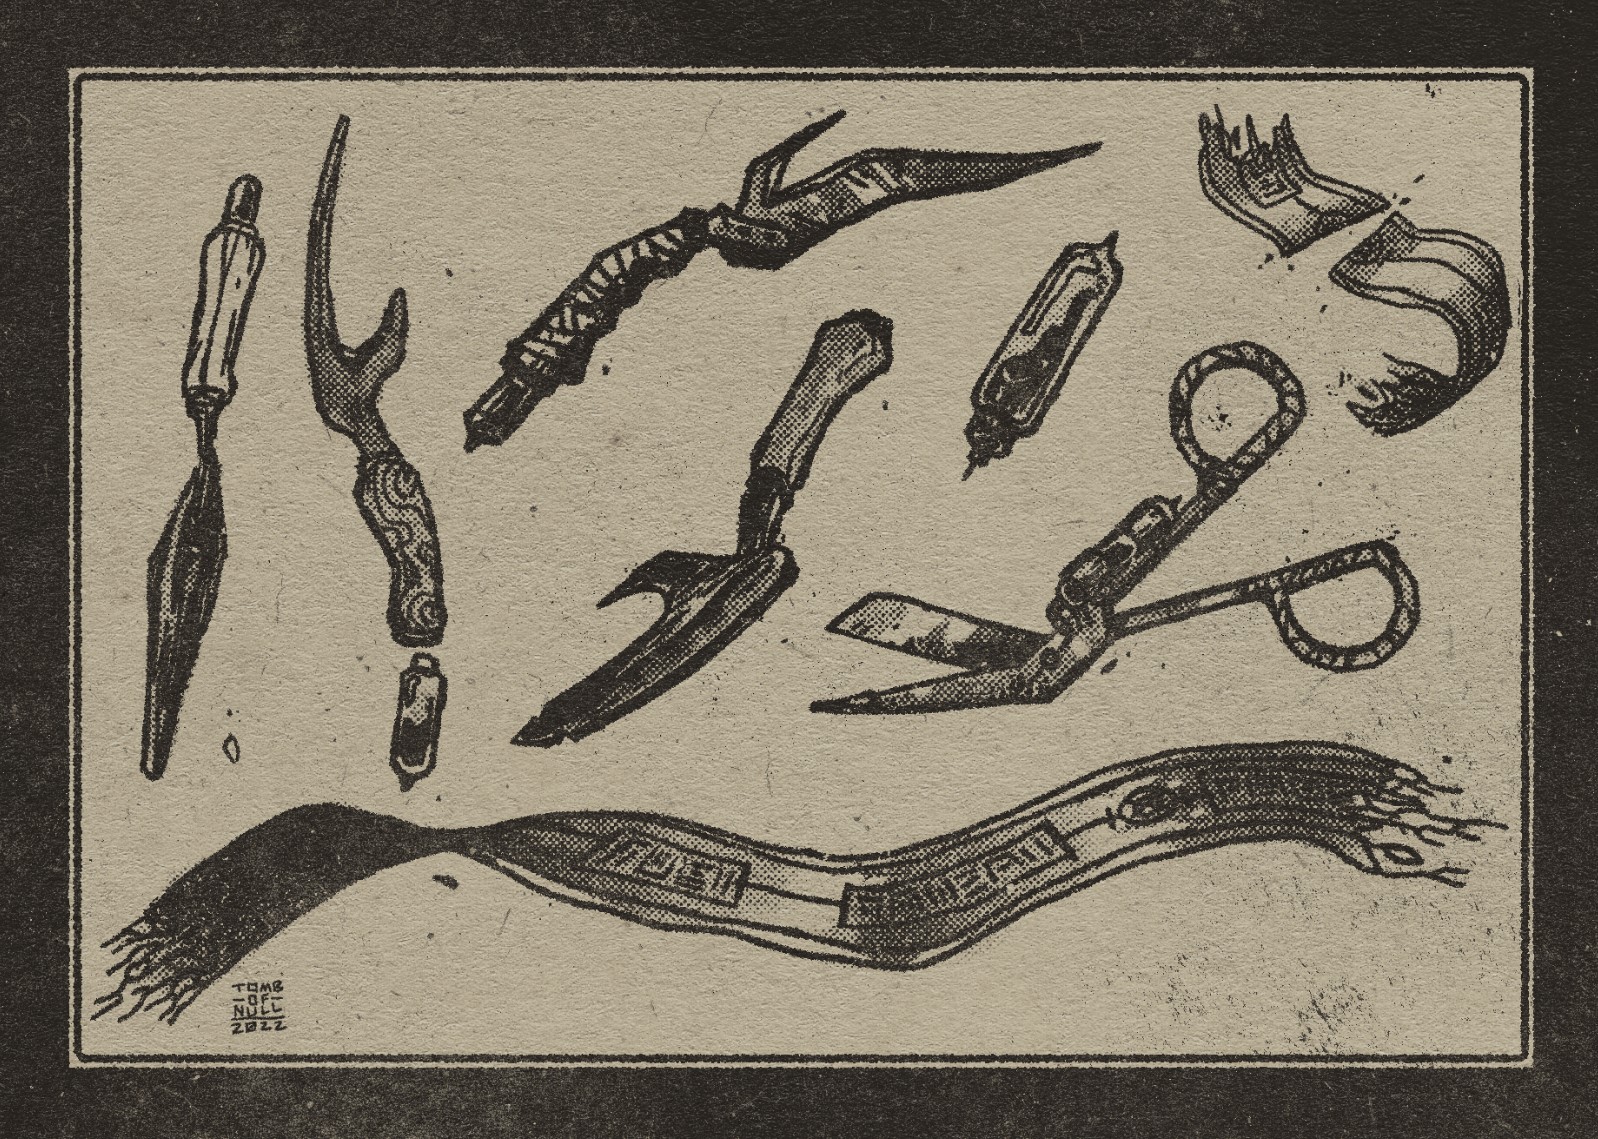 An illustration of various strange tools and ribbon.